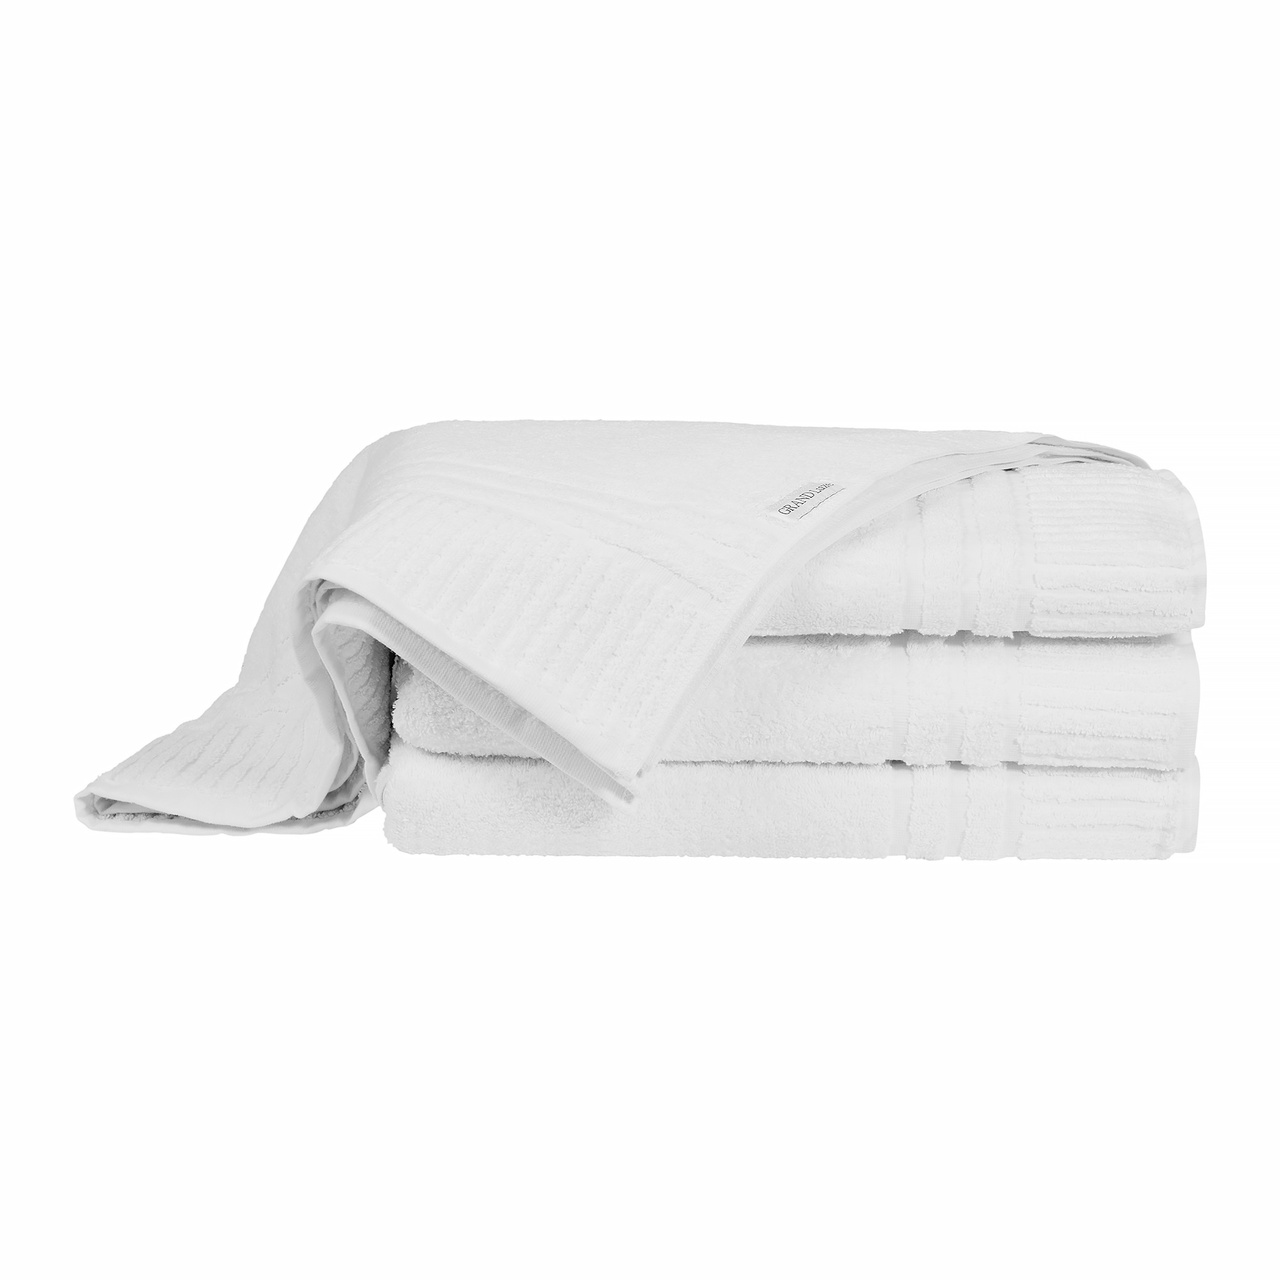 Towel Grand Luxe 100x150 cm 500 g, White 